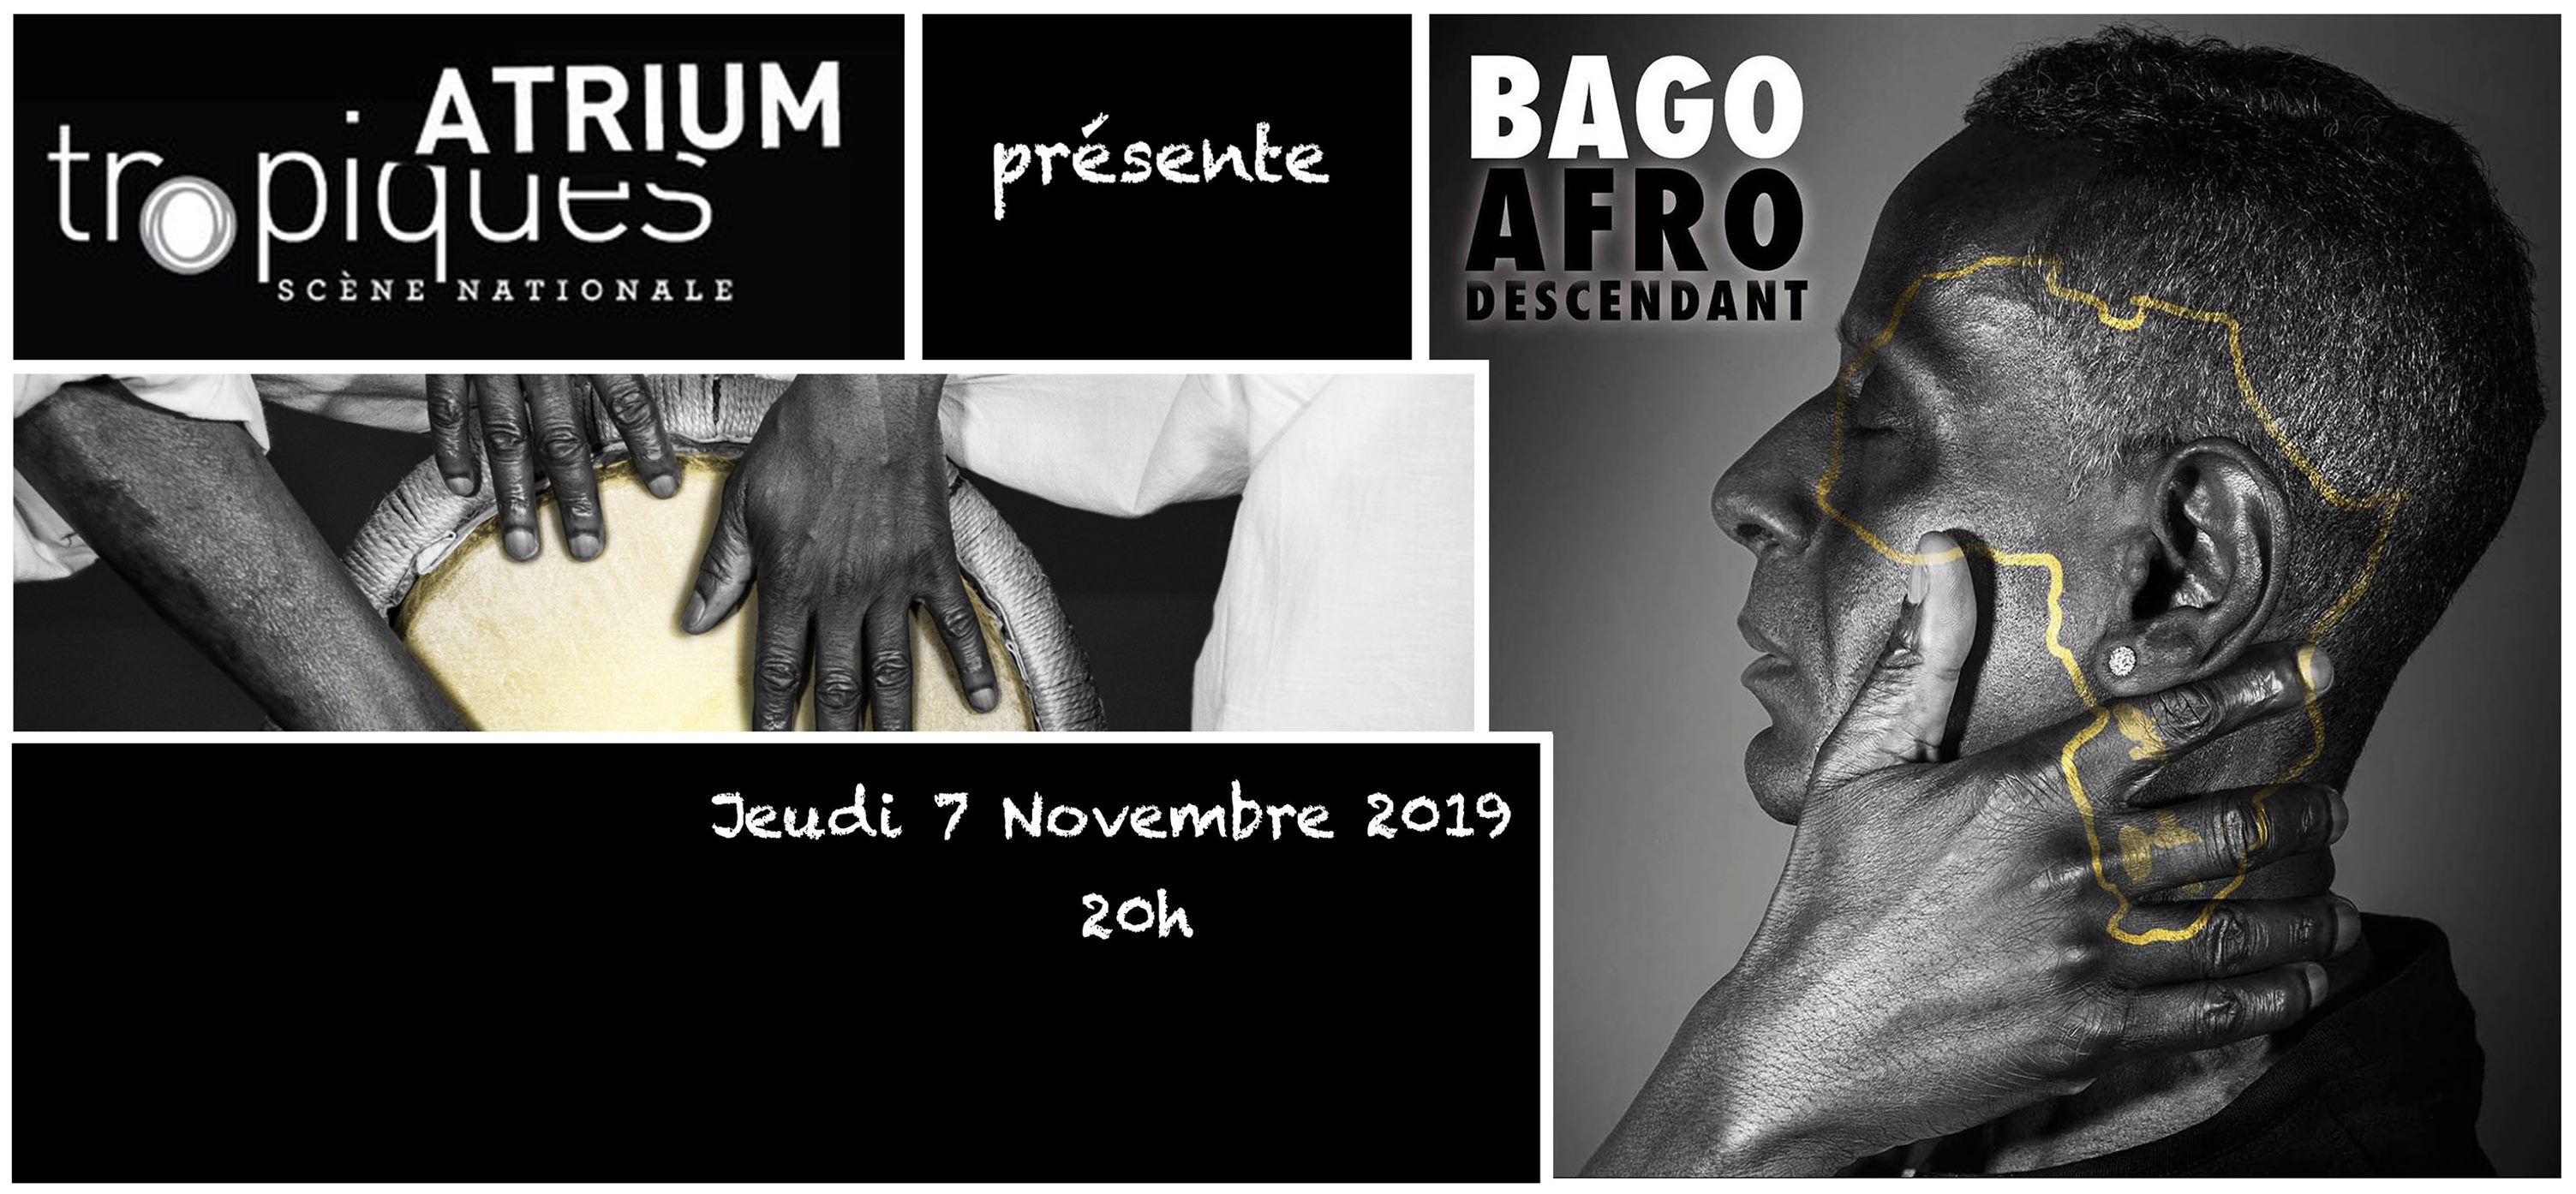 Bago "Afro Descendant"